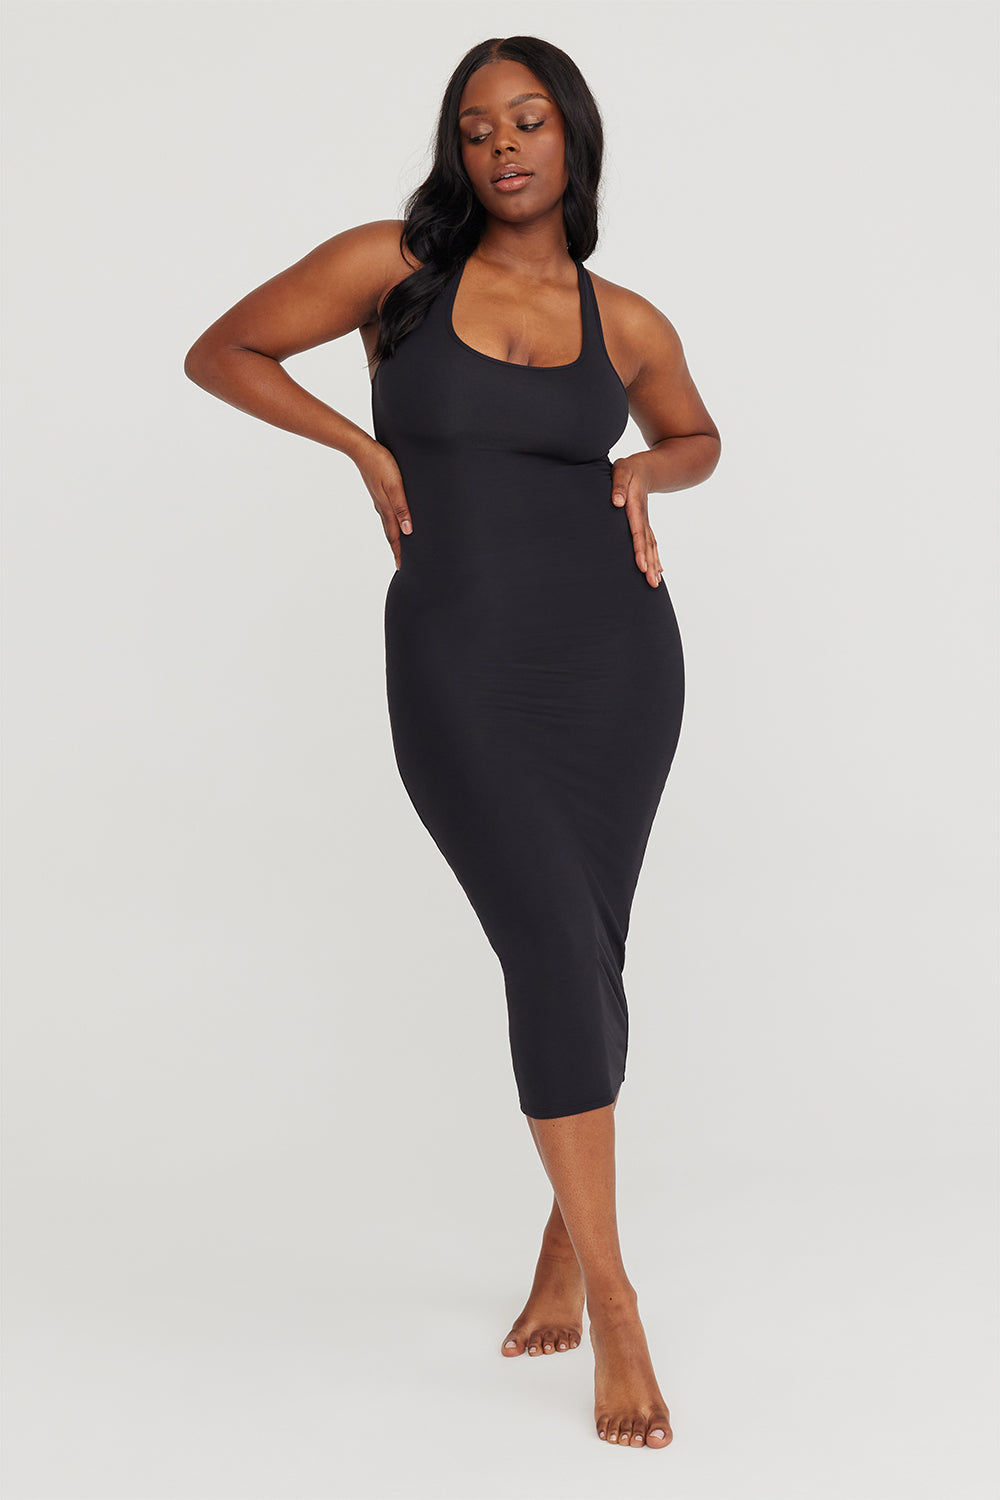 Shop Bodycon Dresses for Women Online | Trendy Bodycon Dresses - Nolabels.in